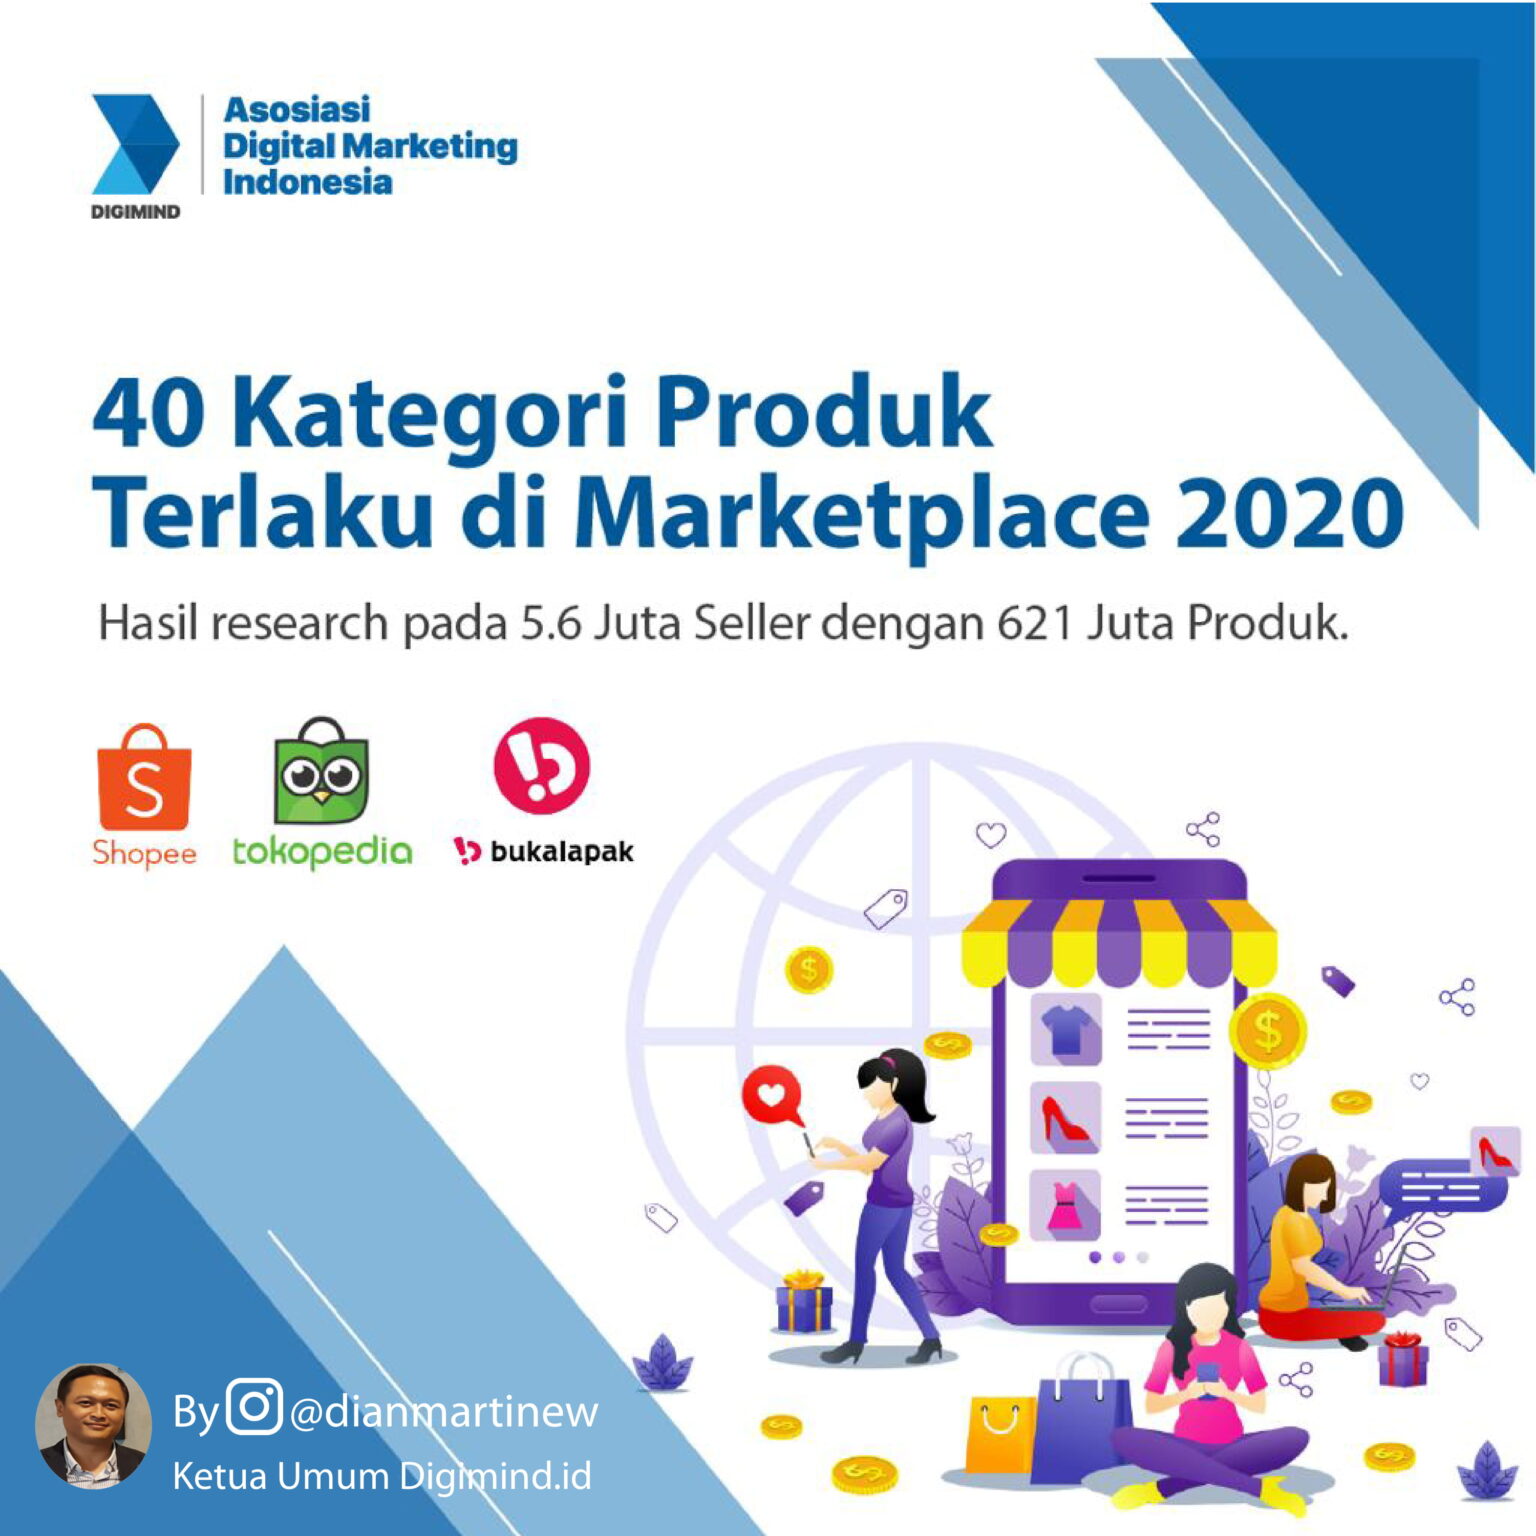 40 Kategori Produk Paling Laris Di Marketplace 2020 Asosiasi Digital Marketing 5305